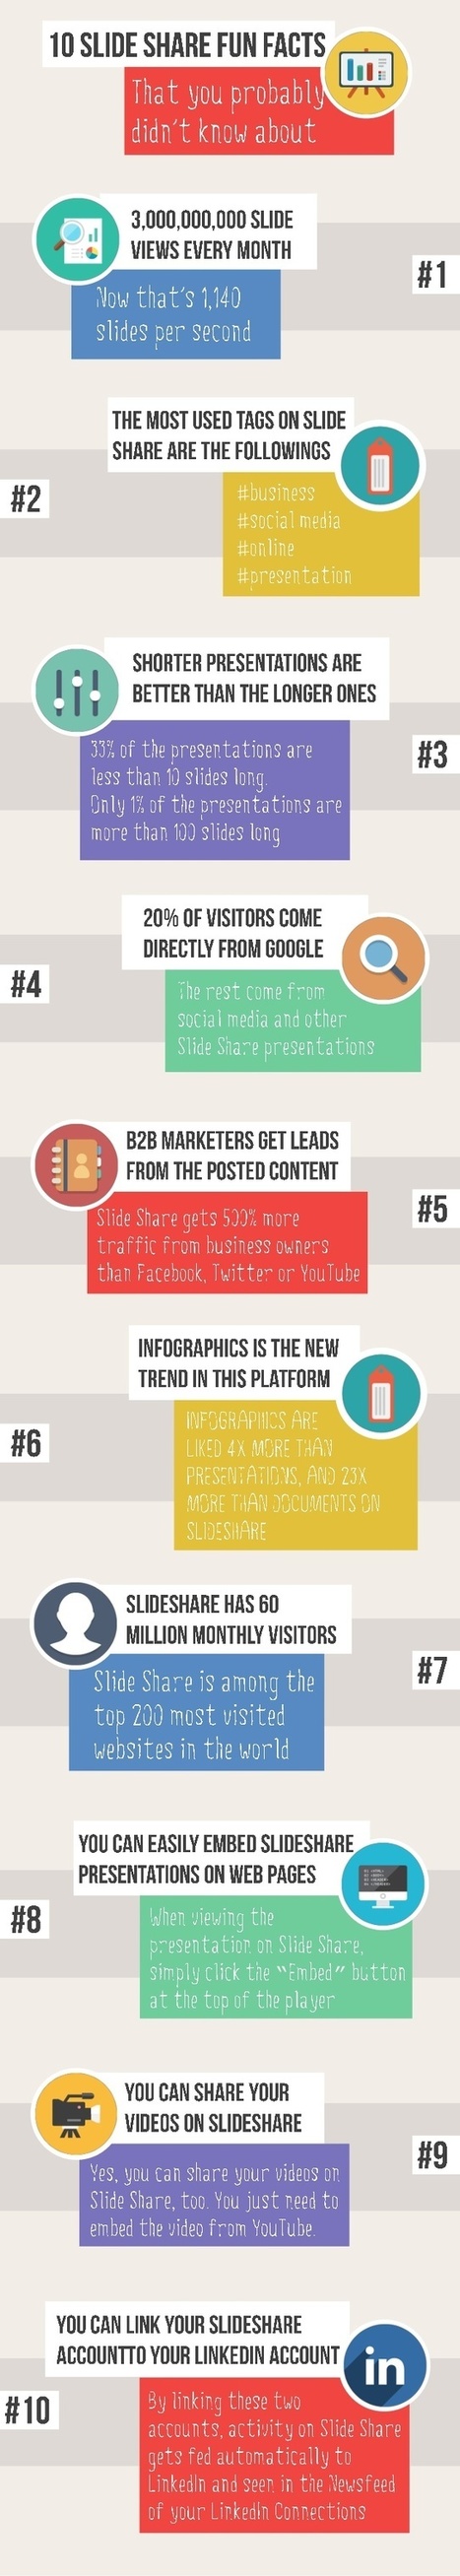 10 datos interesantes sobre Slideshare #infografia #infographic #socialmedia | Seo, Social Media Marketing | Scoop.it